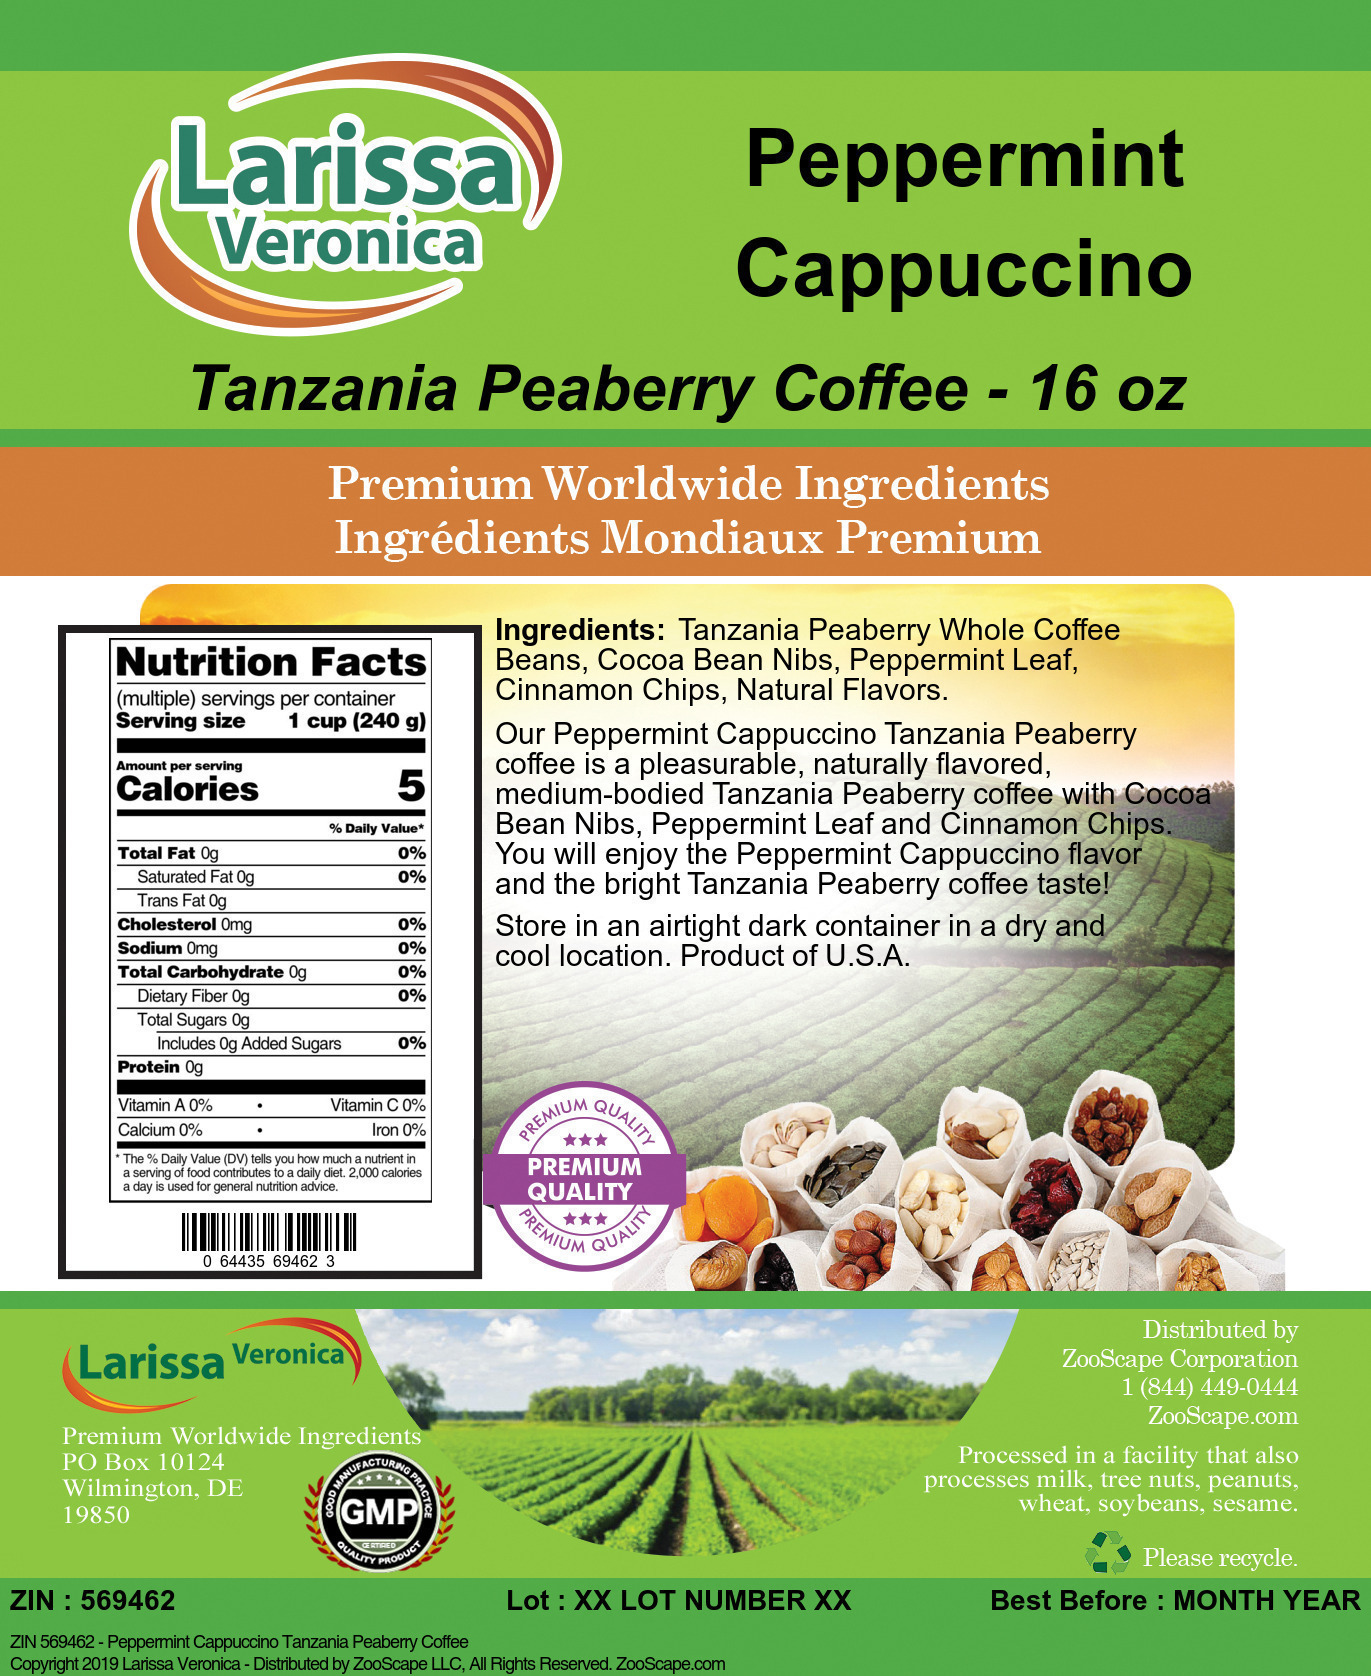 Peppermint Cappuccino Tanzania Peaberry Coffee - Label